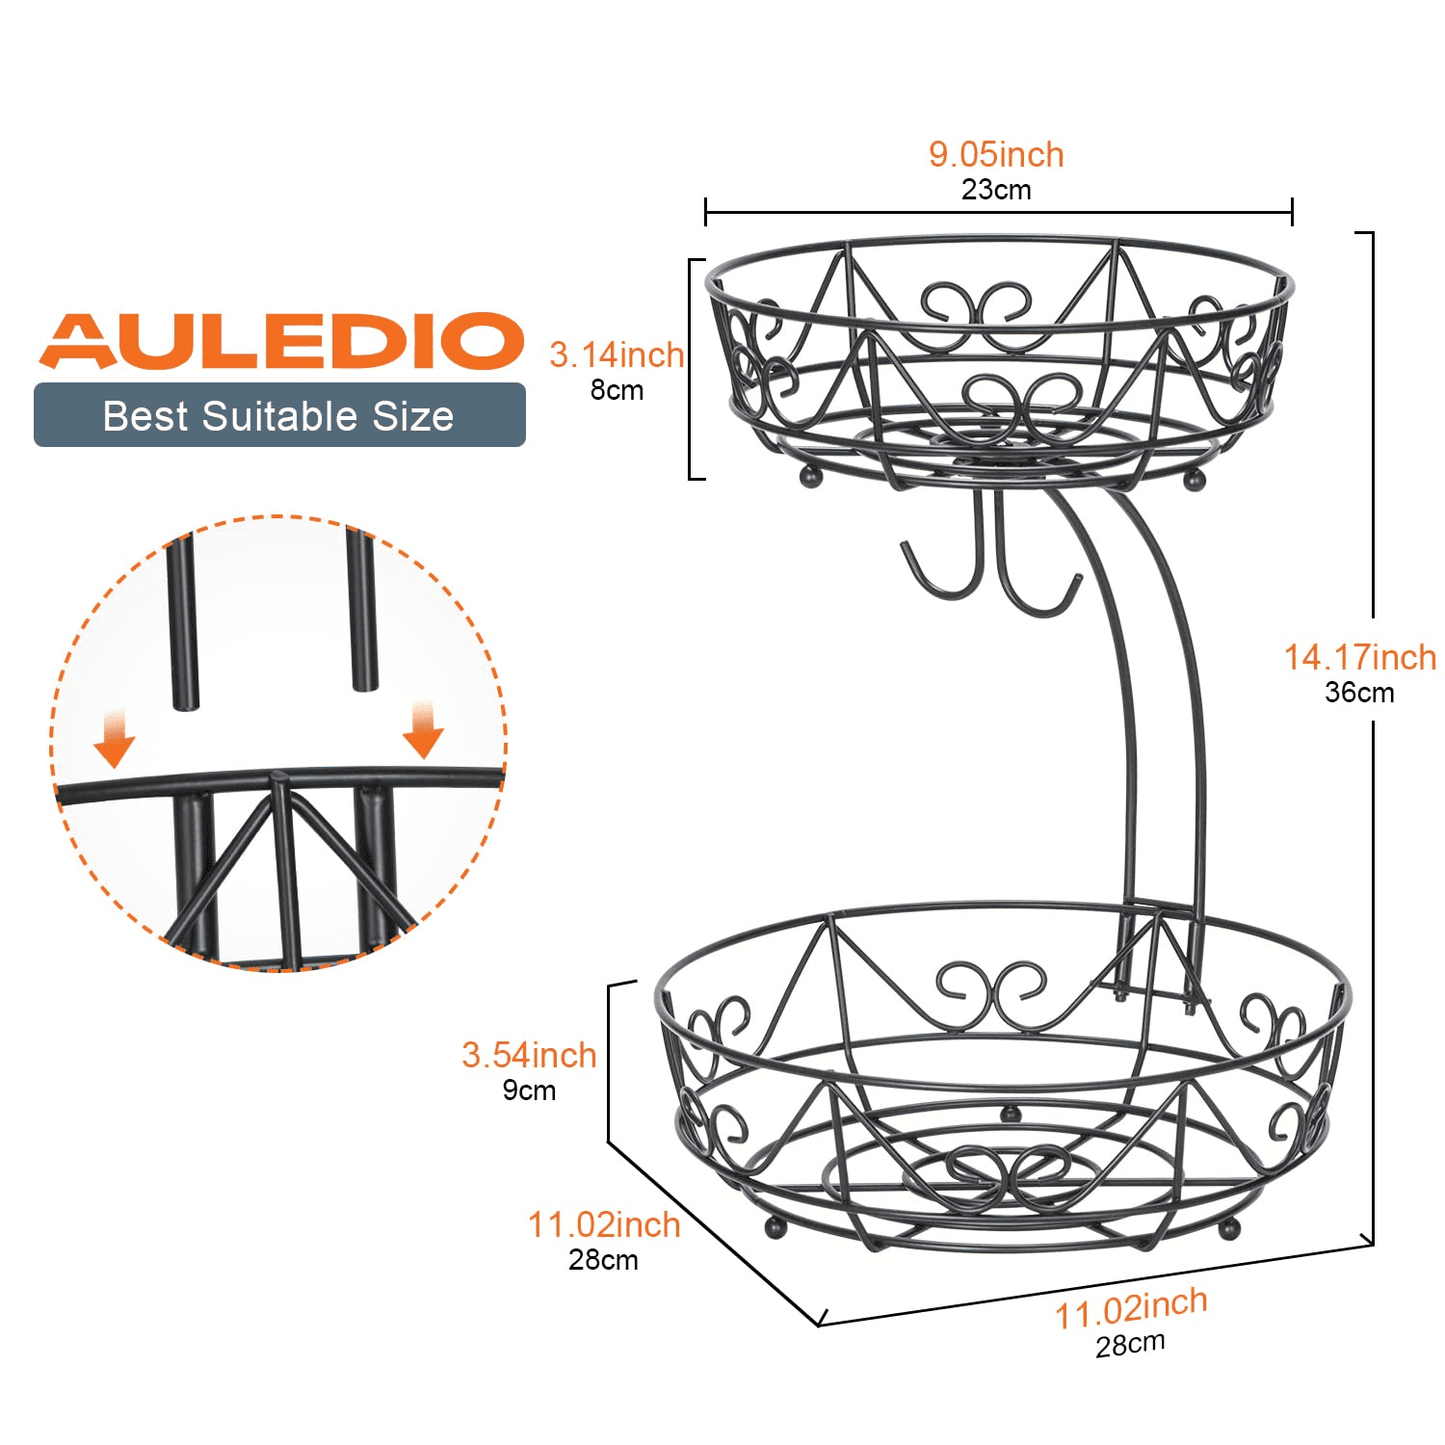 Auledio 2-Tier Countertop Fruit & Vegetable Basket & Bowl Storage with Double Banana Hooks, Black